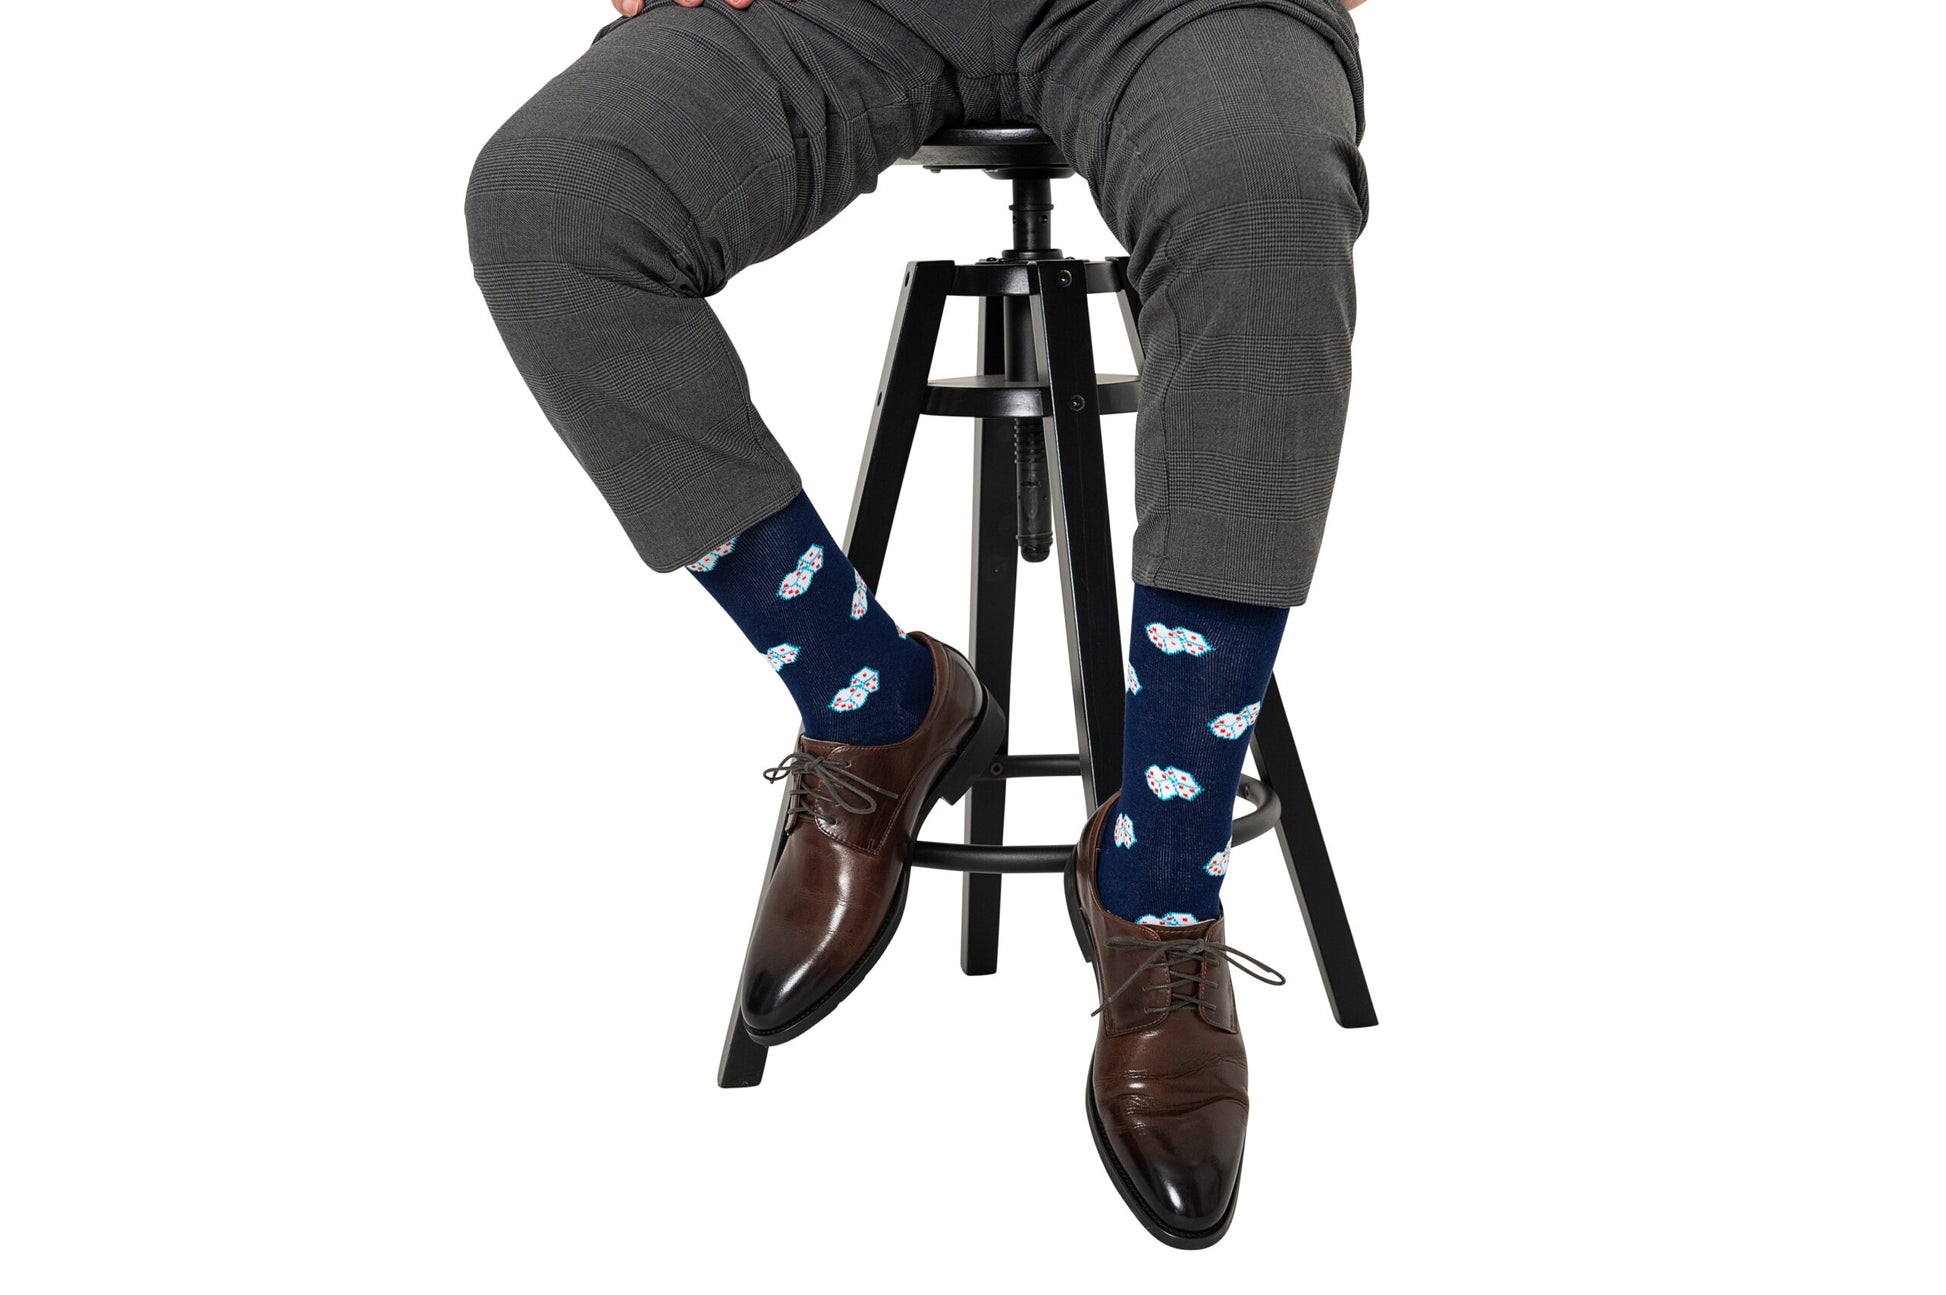 A man sitting on a stool wearing Dice Socks.